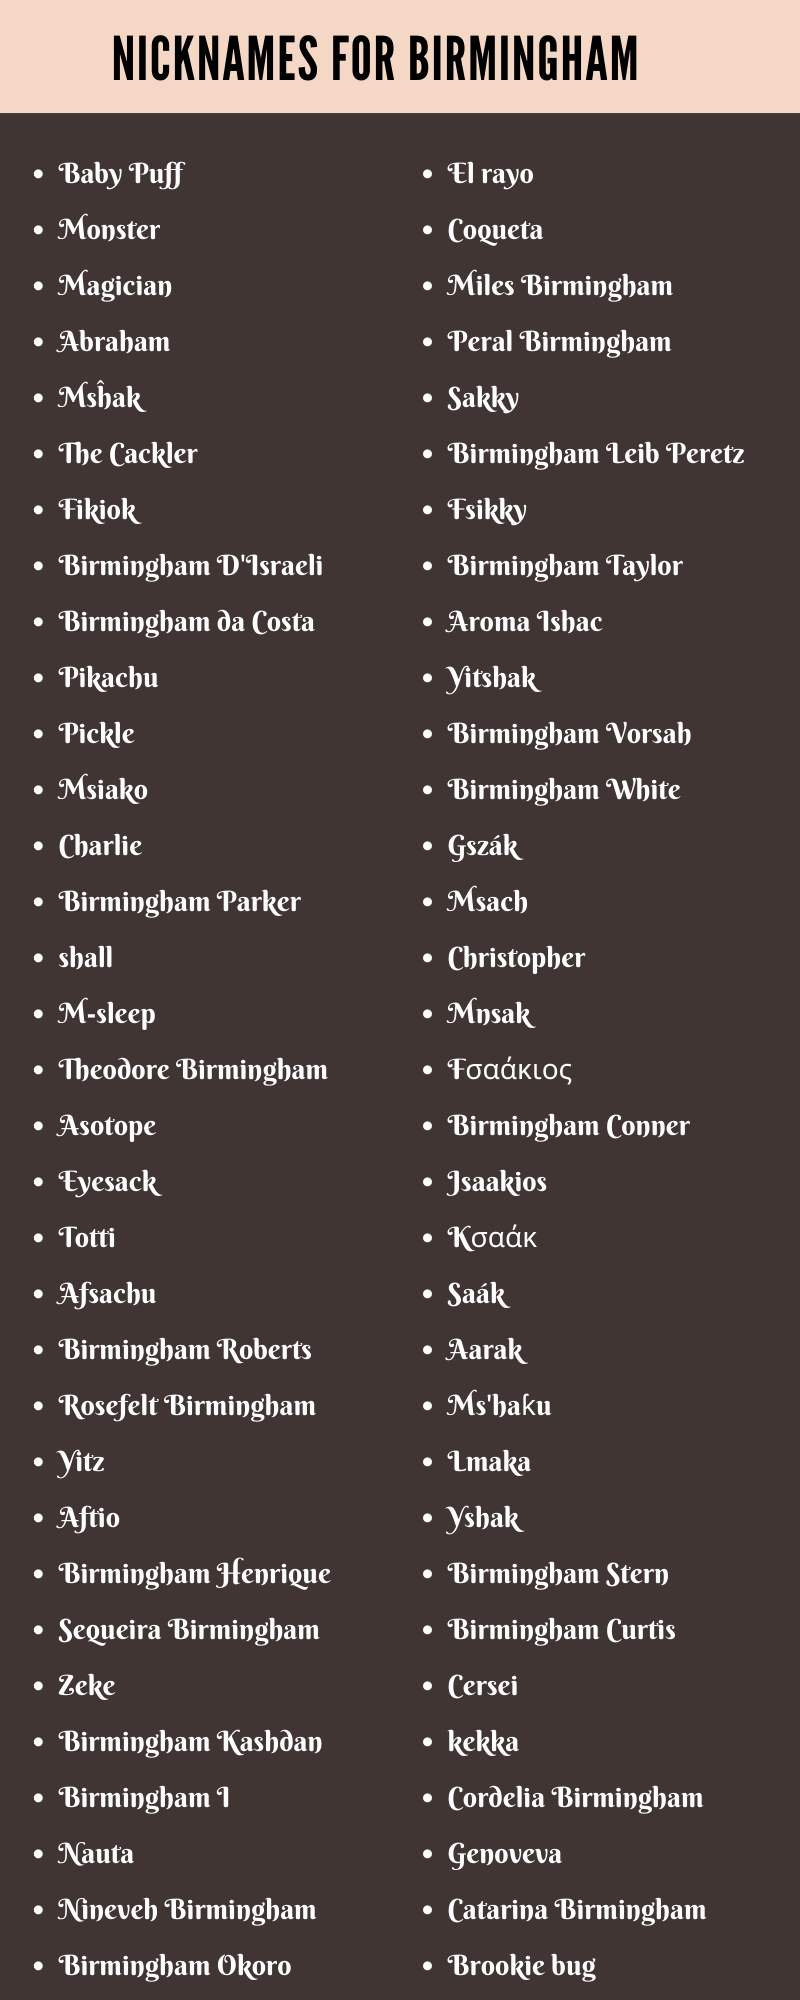 Nicknames for Birmingham